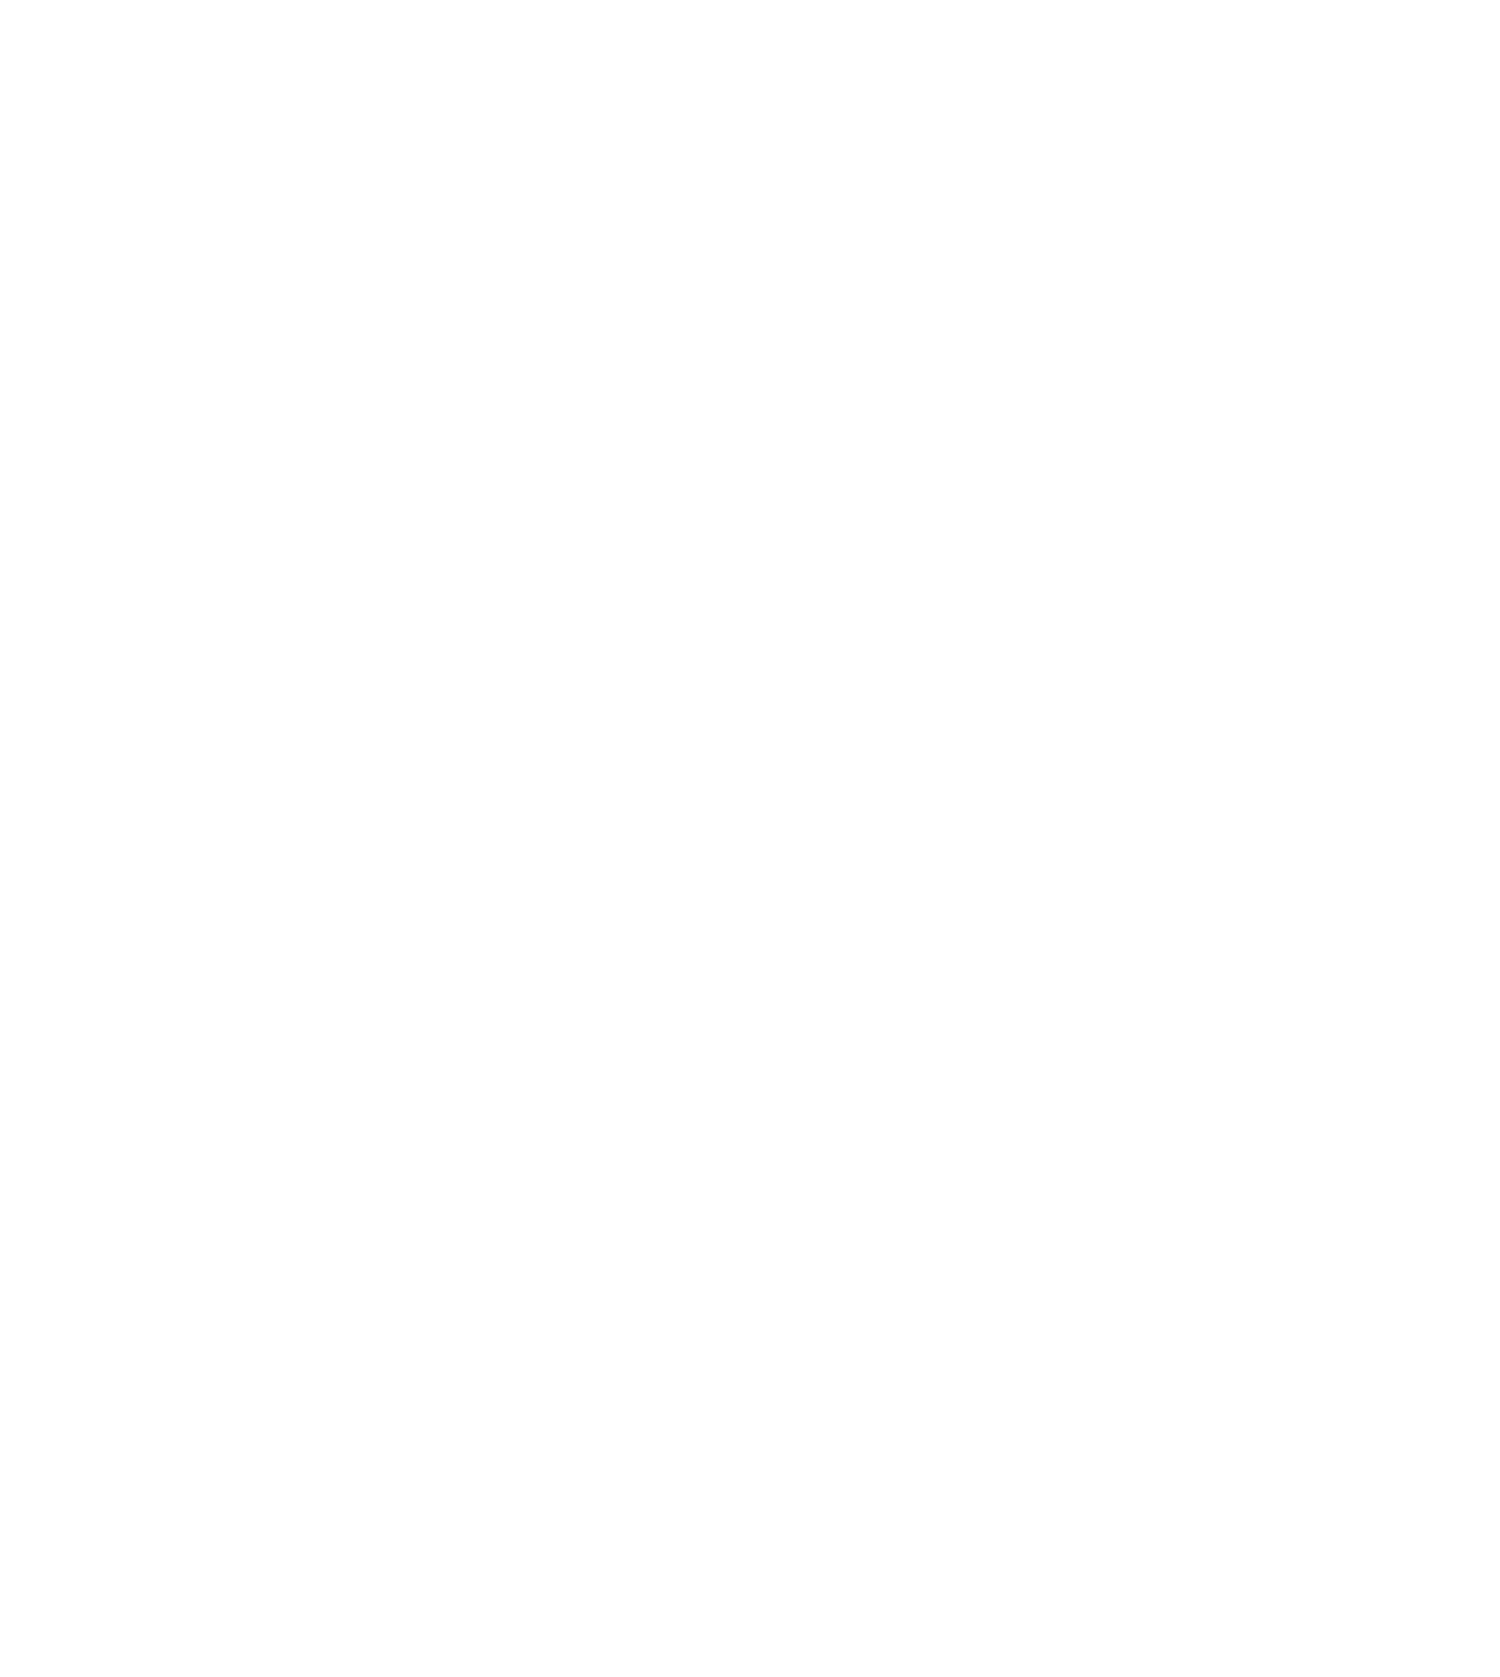 Overfair Pacific Railroad